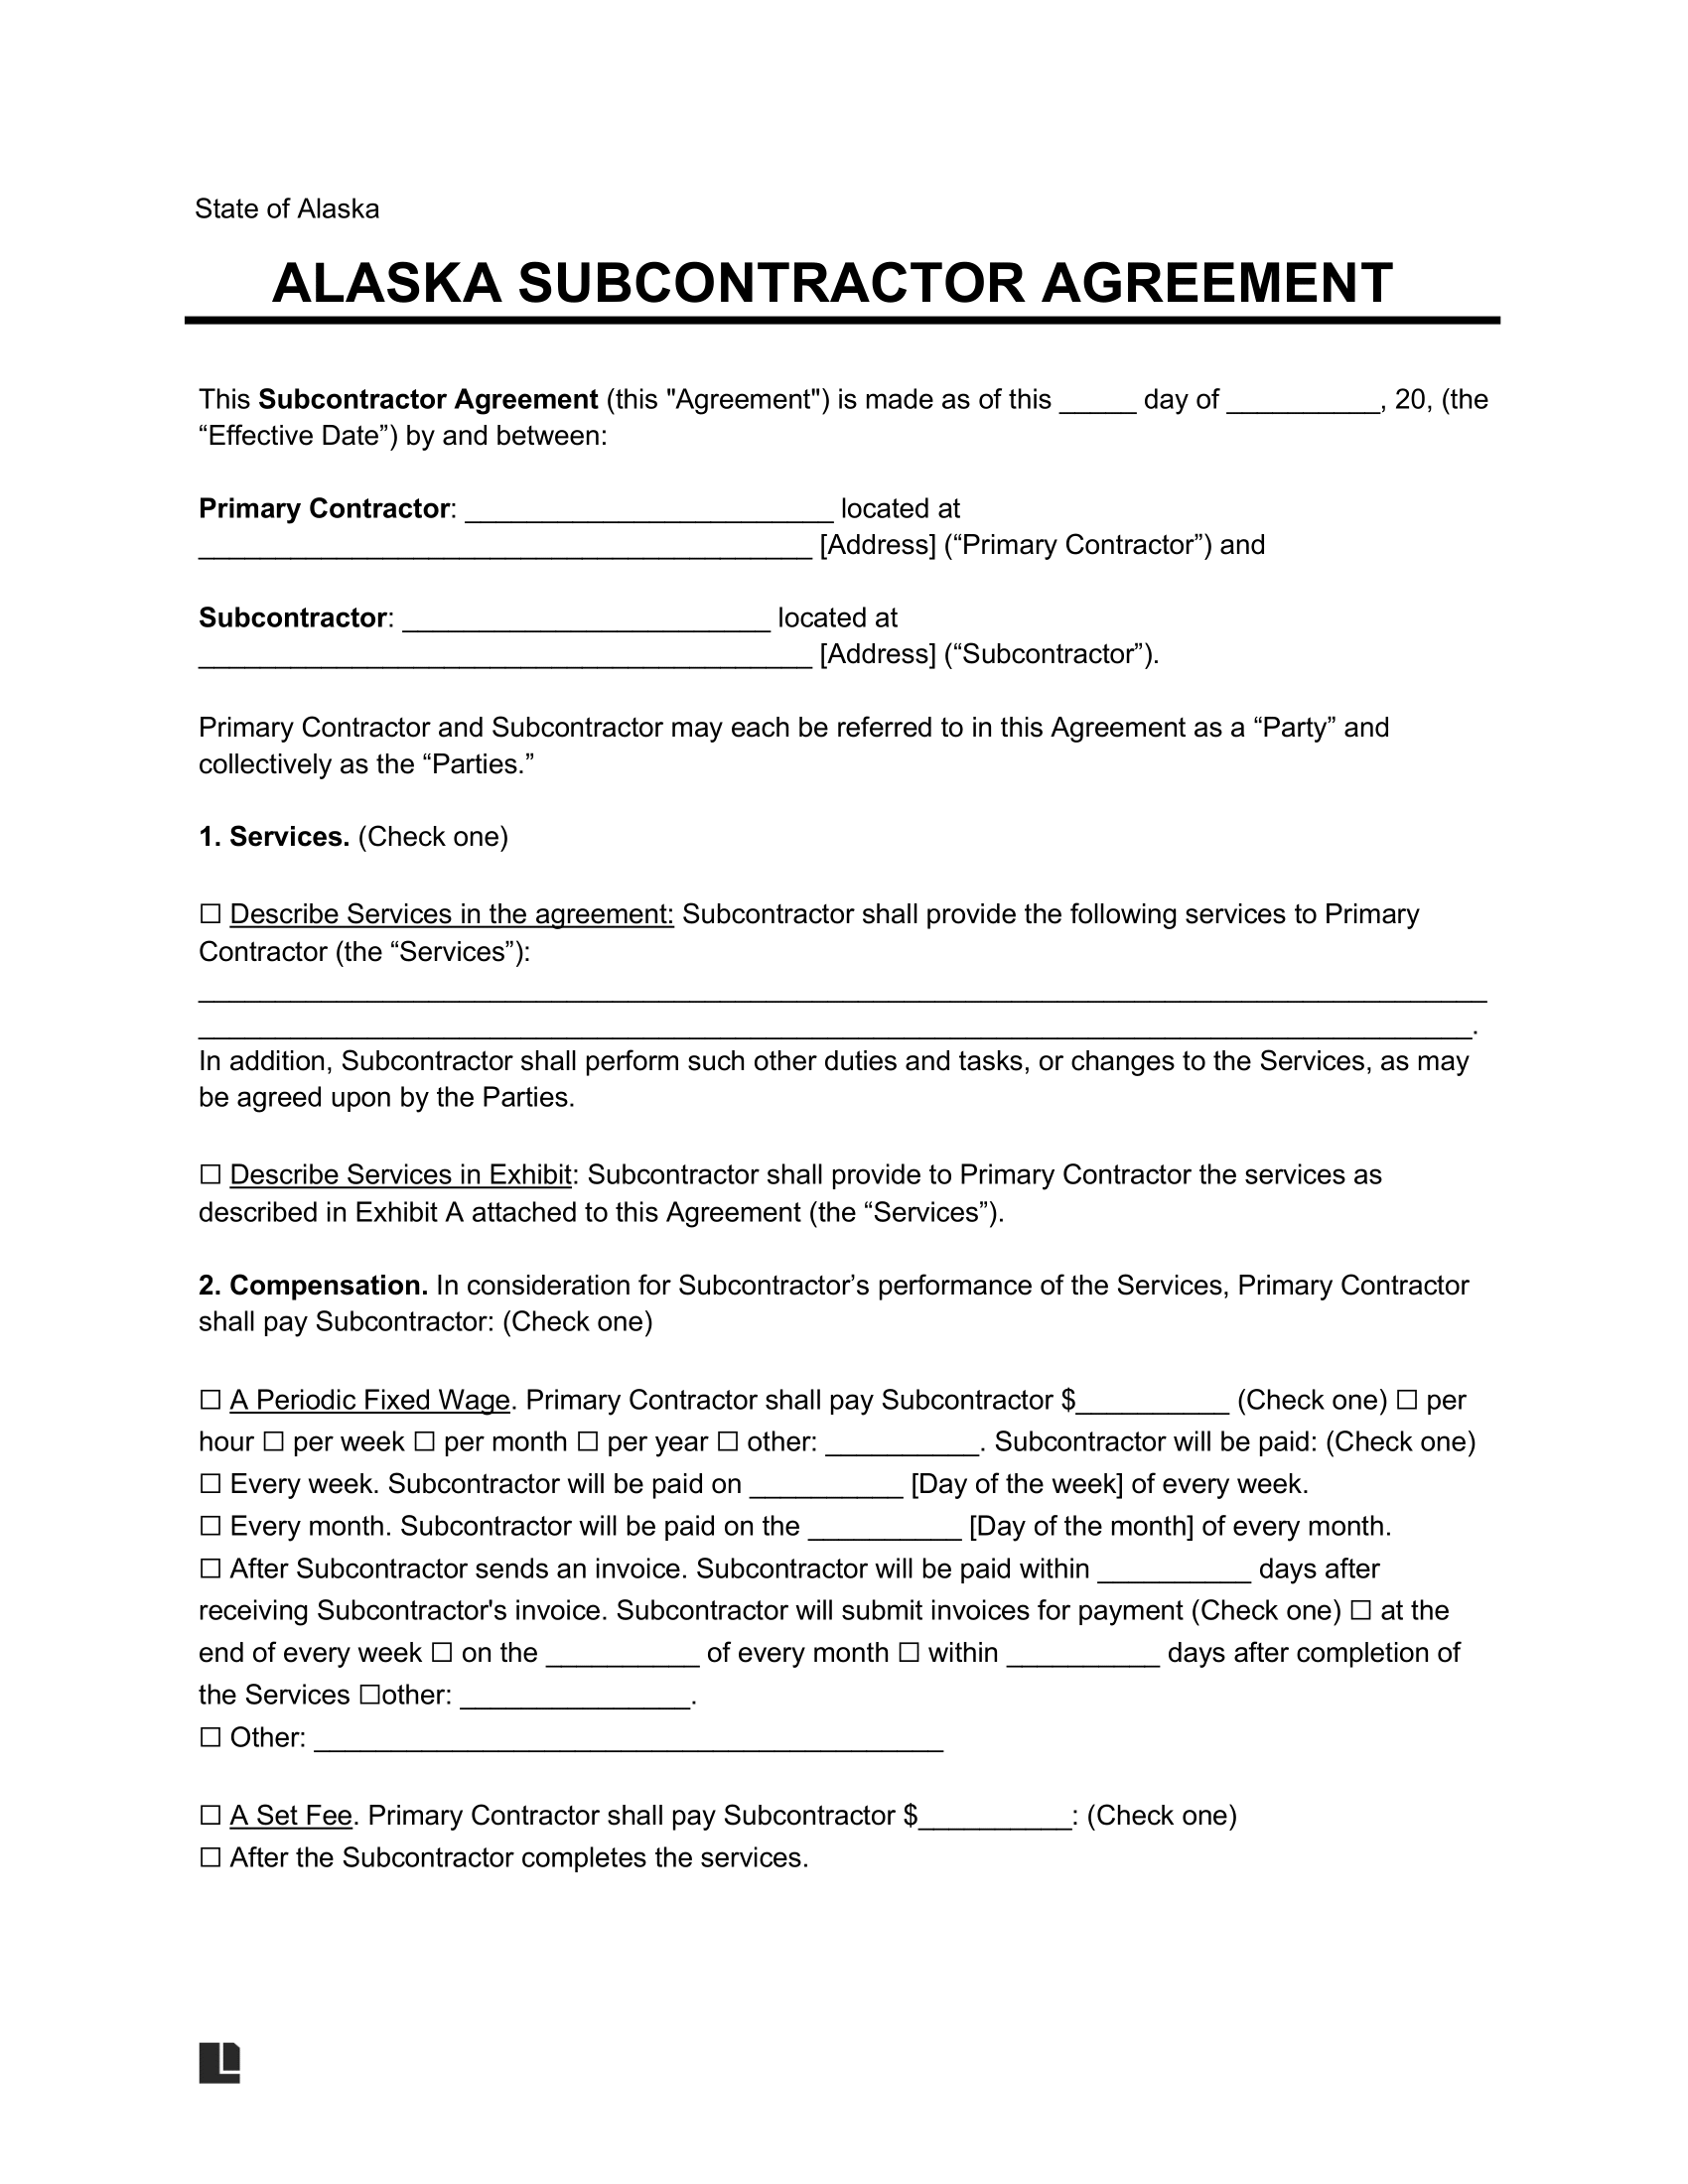 alaska subcontractor agreement template